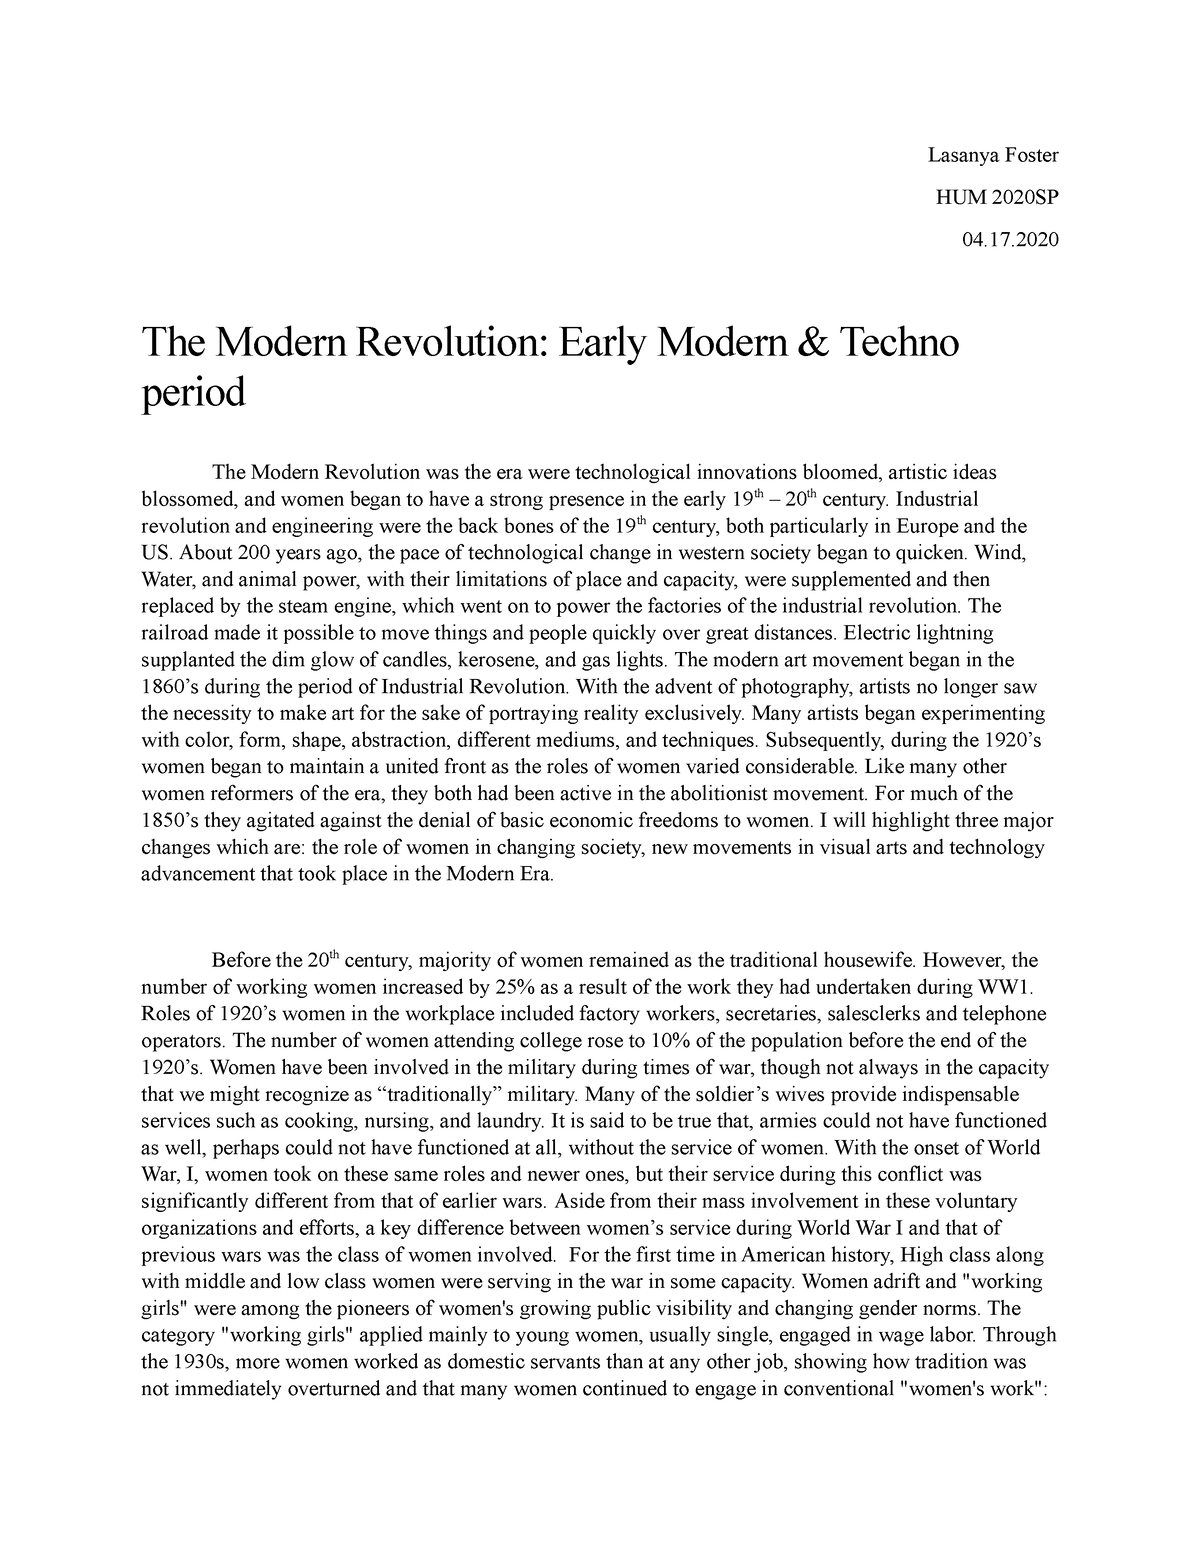 essay on early modern period